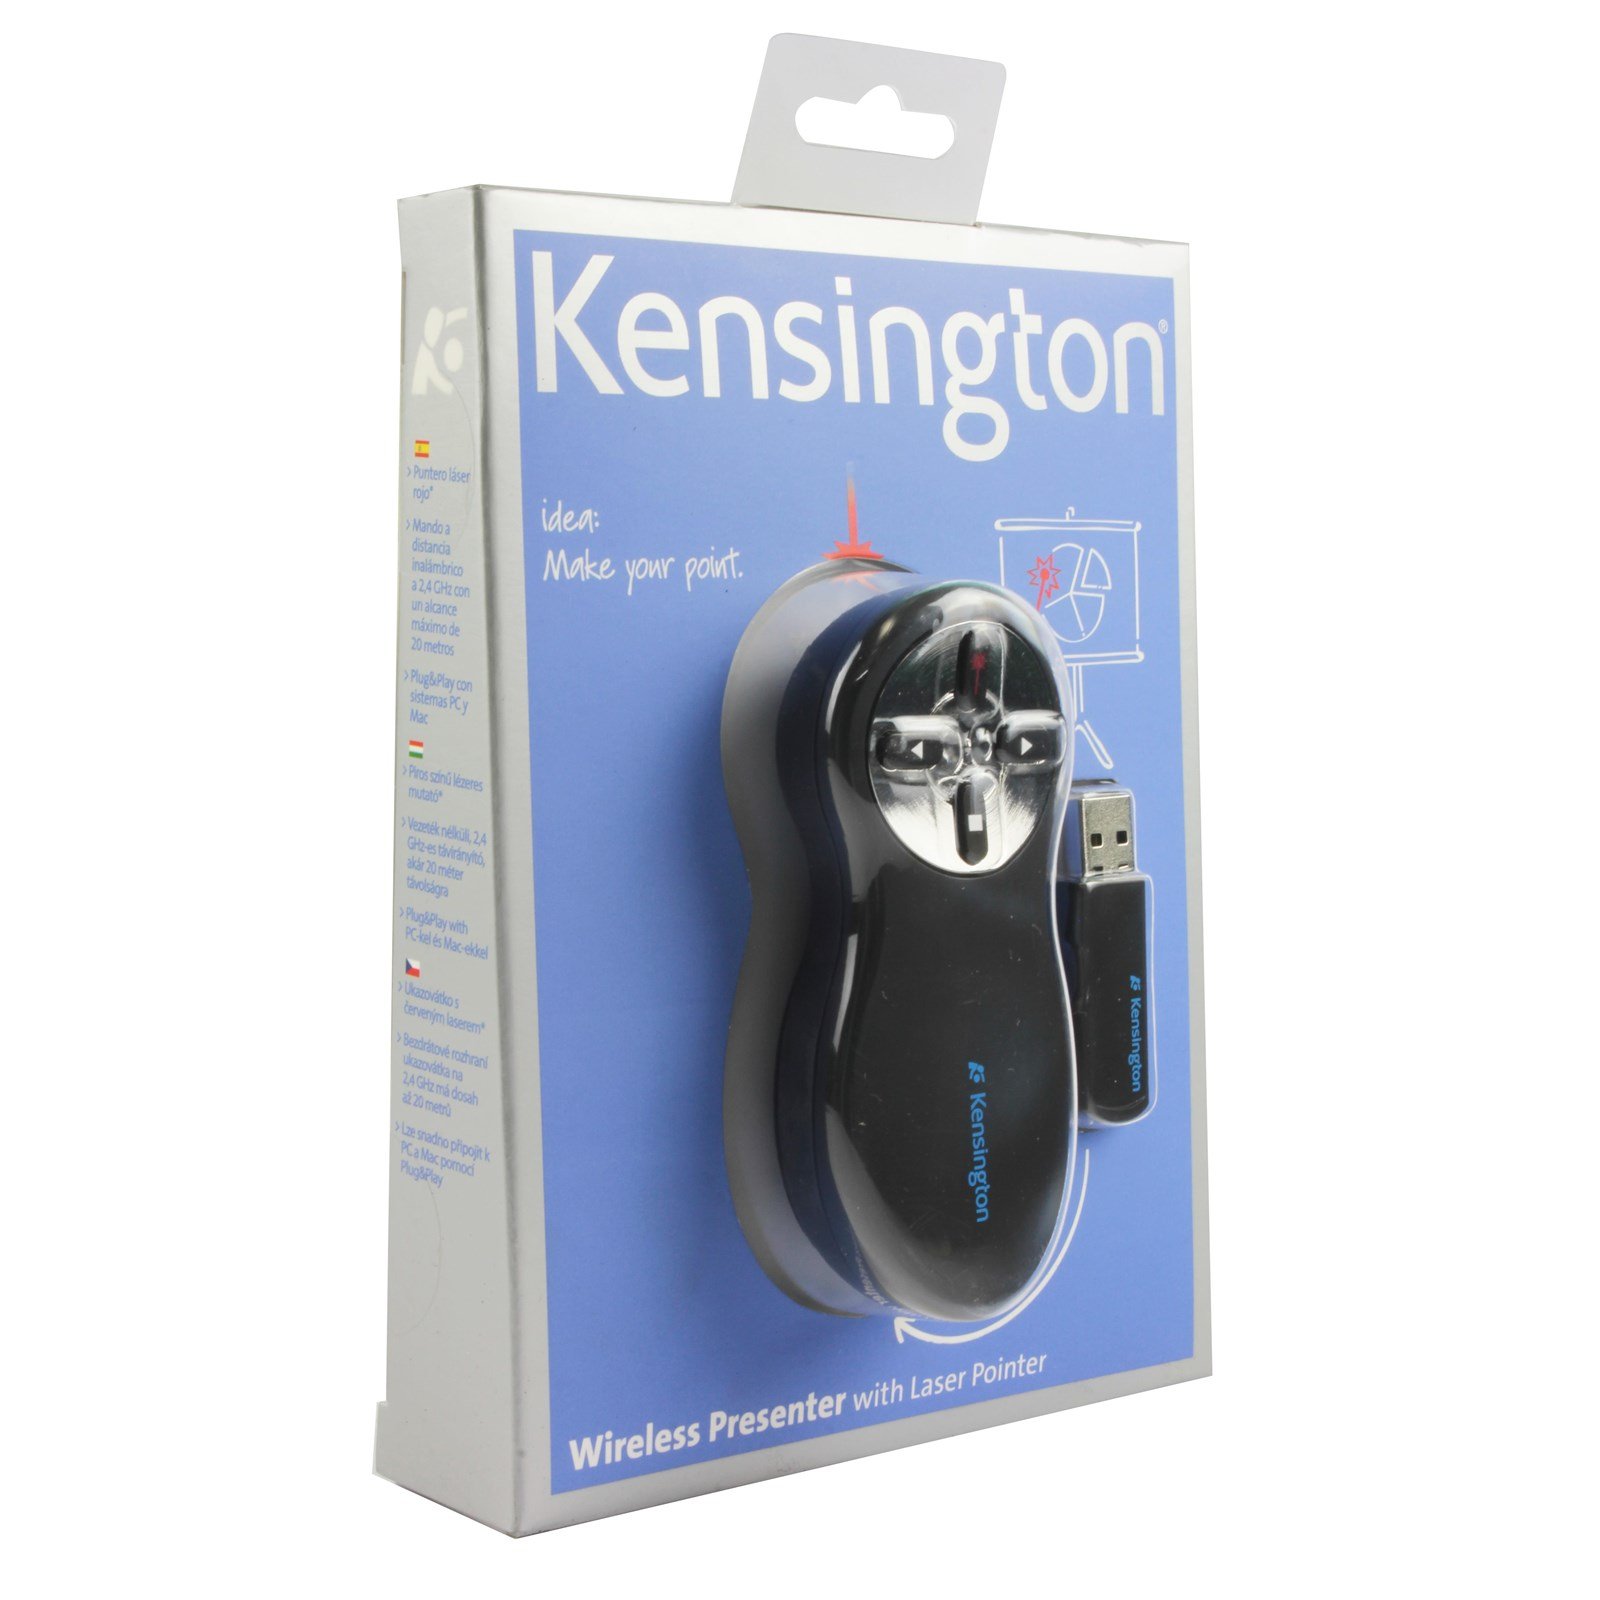 Kensington 2.4GHz Wireless Presenter with Red Laser